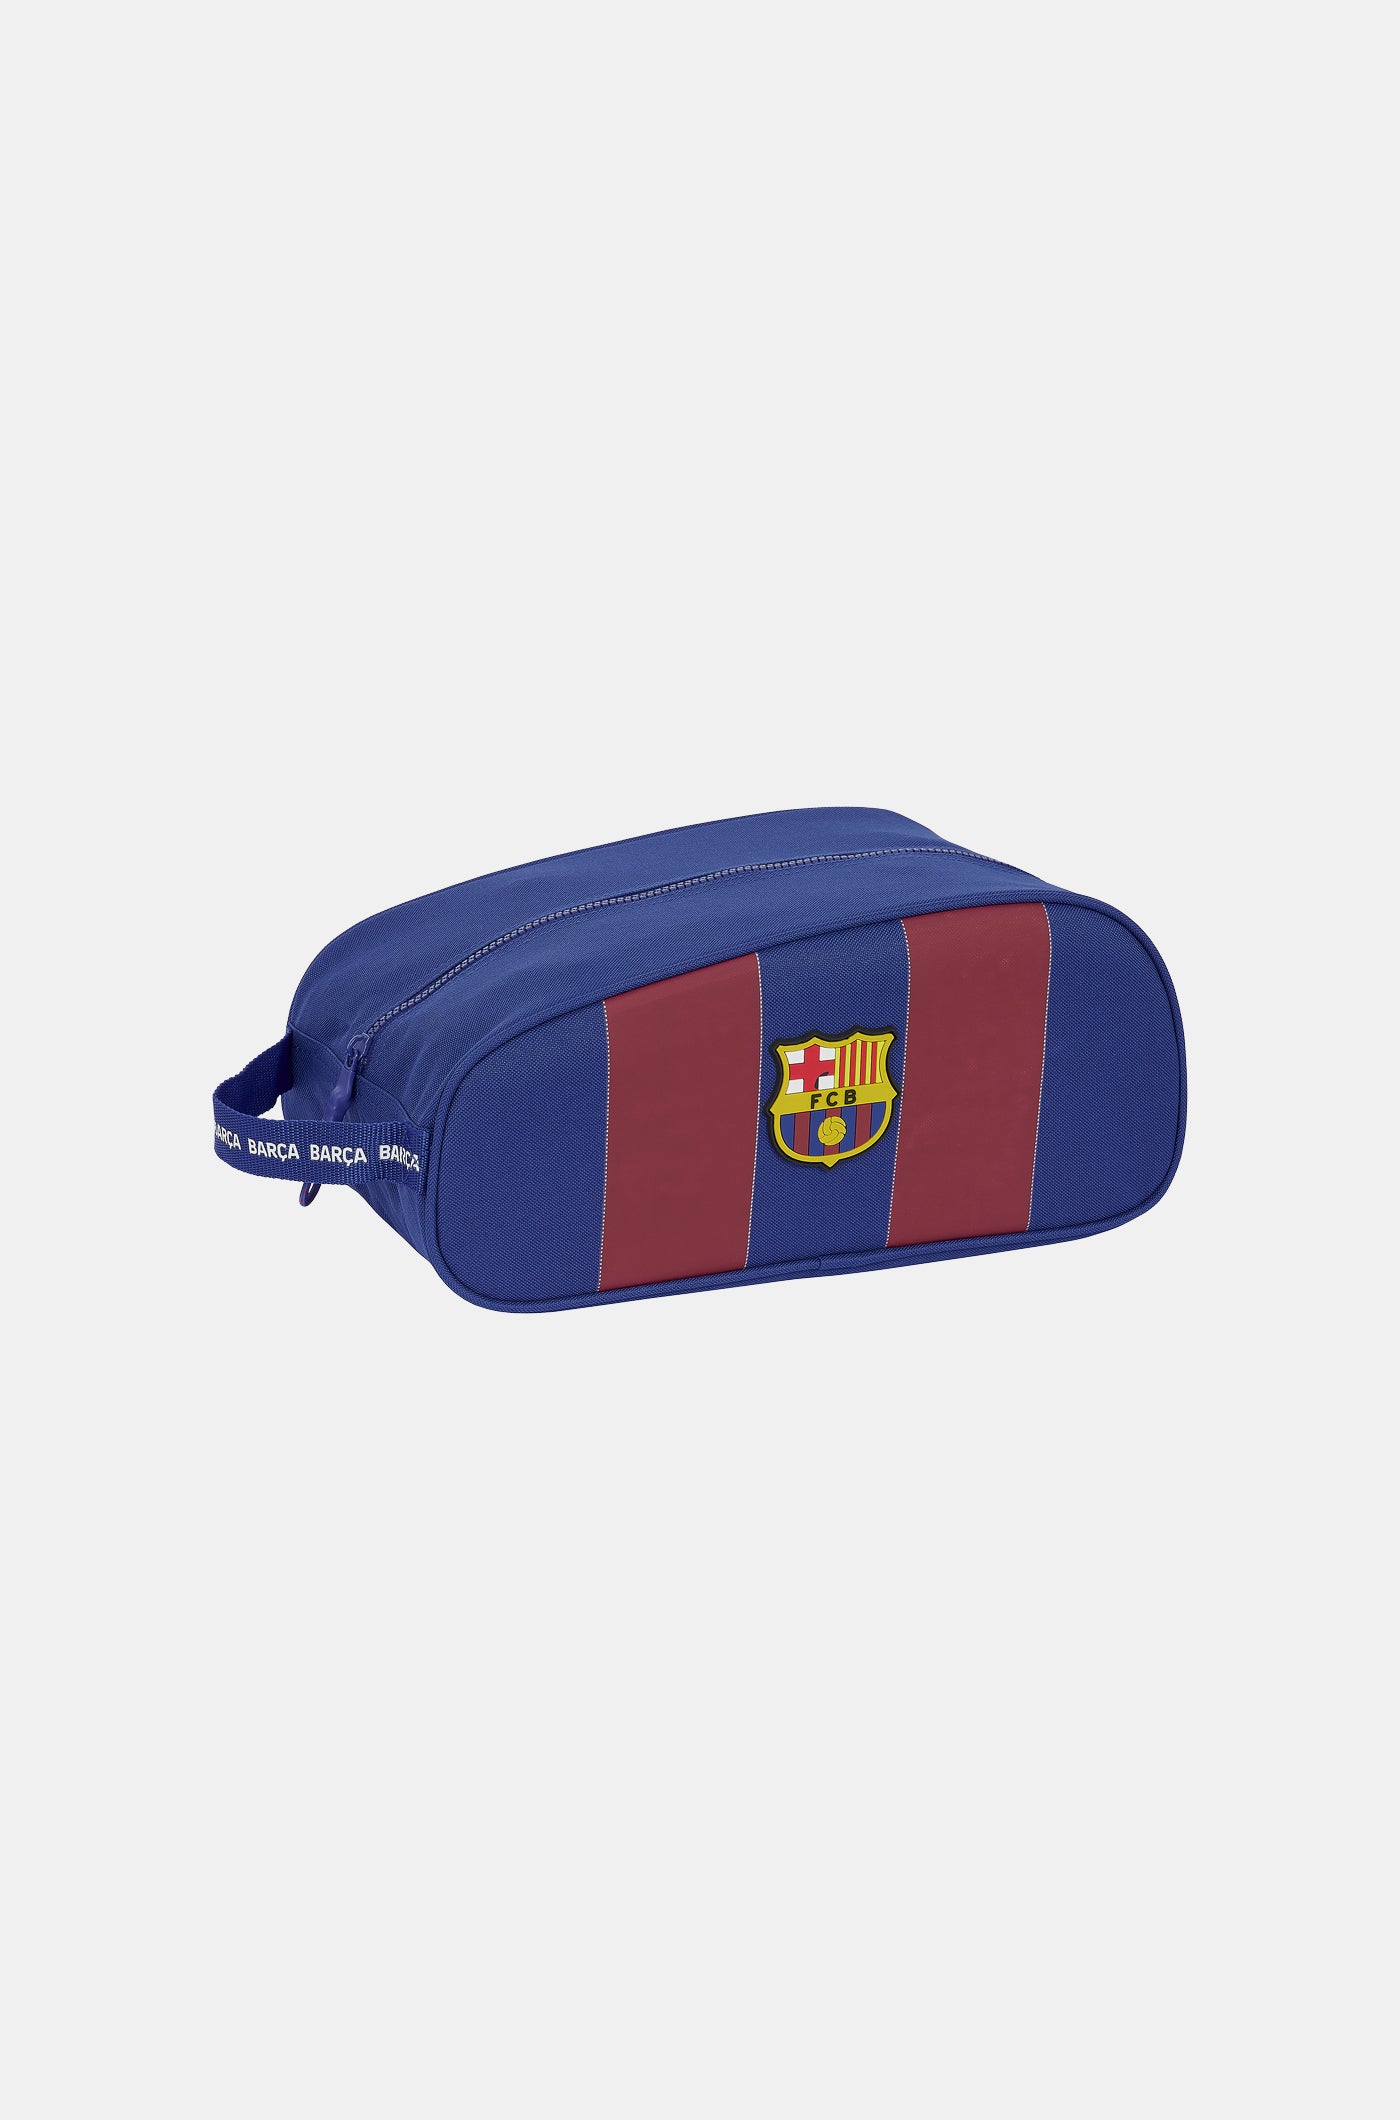 FC Barcelona 1st kit Schuhschrank 23/24